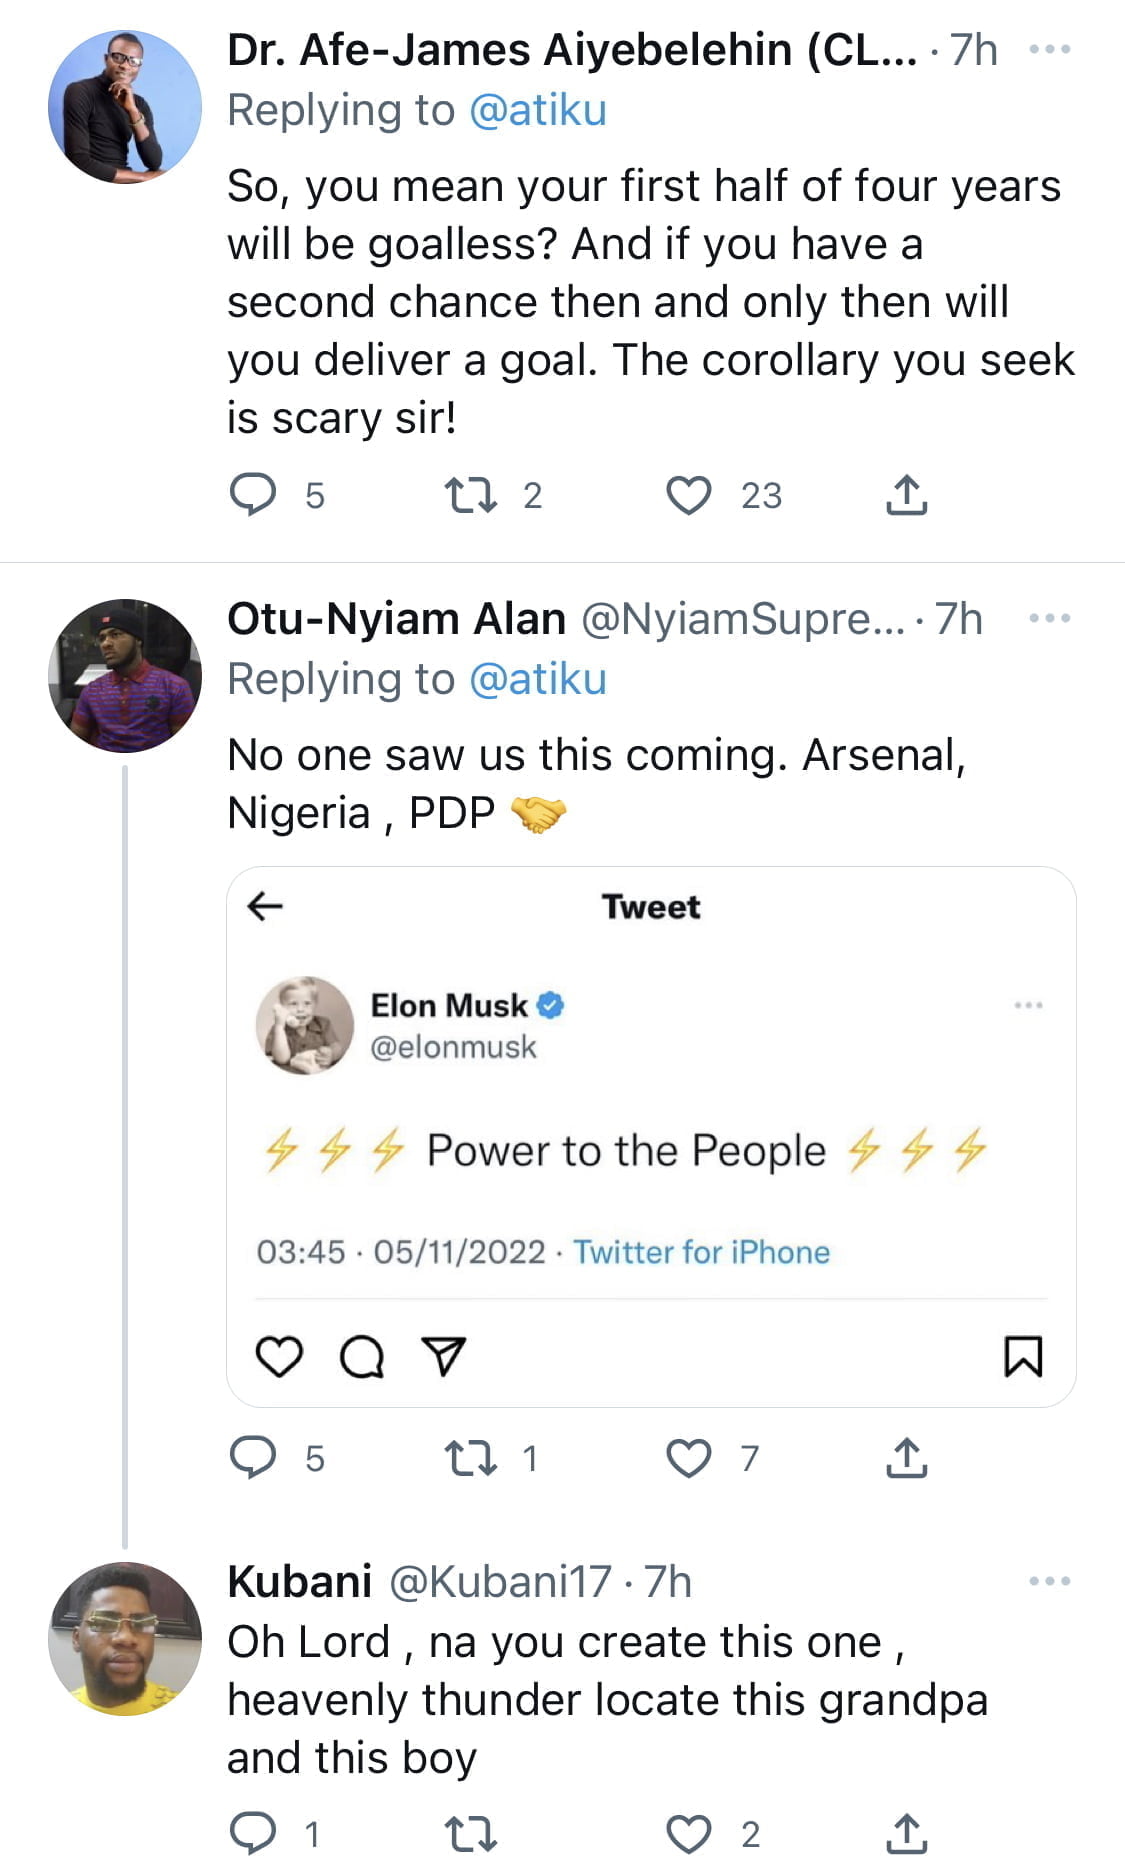 I will fix Nigeria’s problems the way Arsenal beat Chelsea - Atiku vows